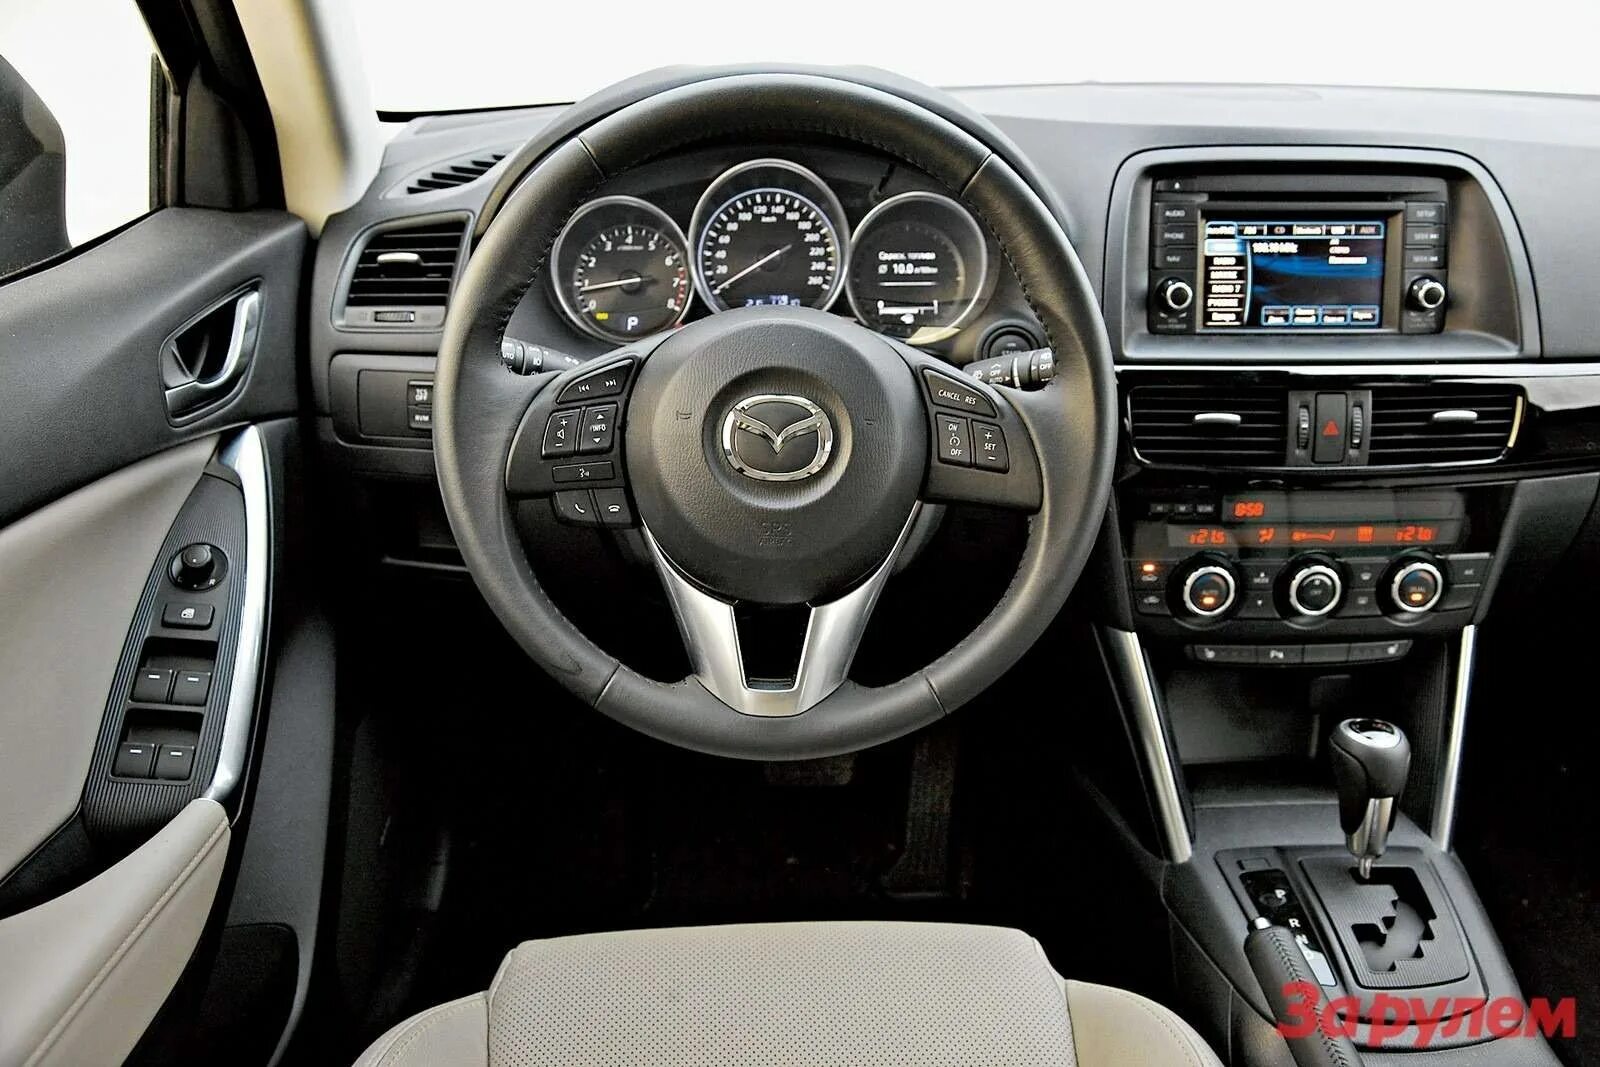 Mazda CX 5 салон. Mazda CX 5 2012 салон. Mazda CX 5 2015 салон. Mazda cx5 CX салон. Управление маздой сх 5